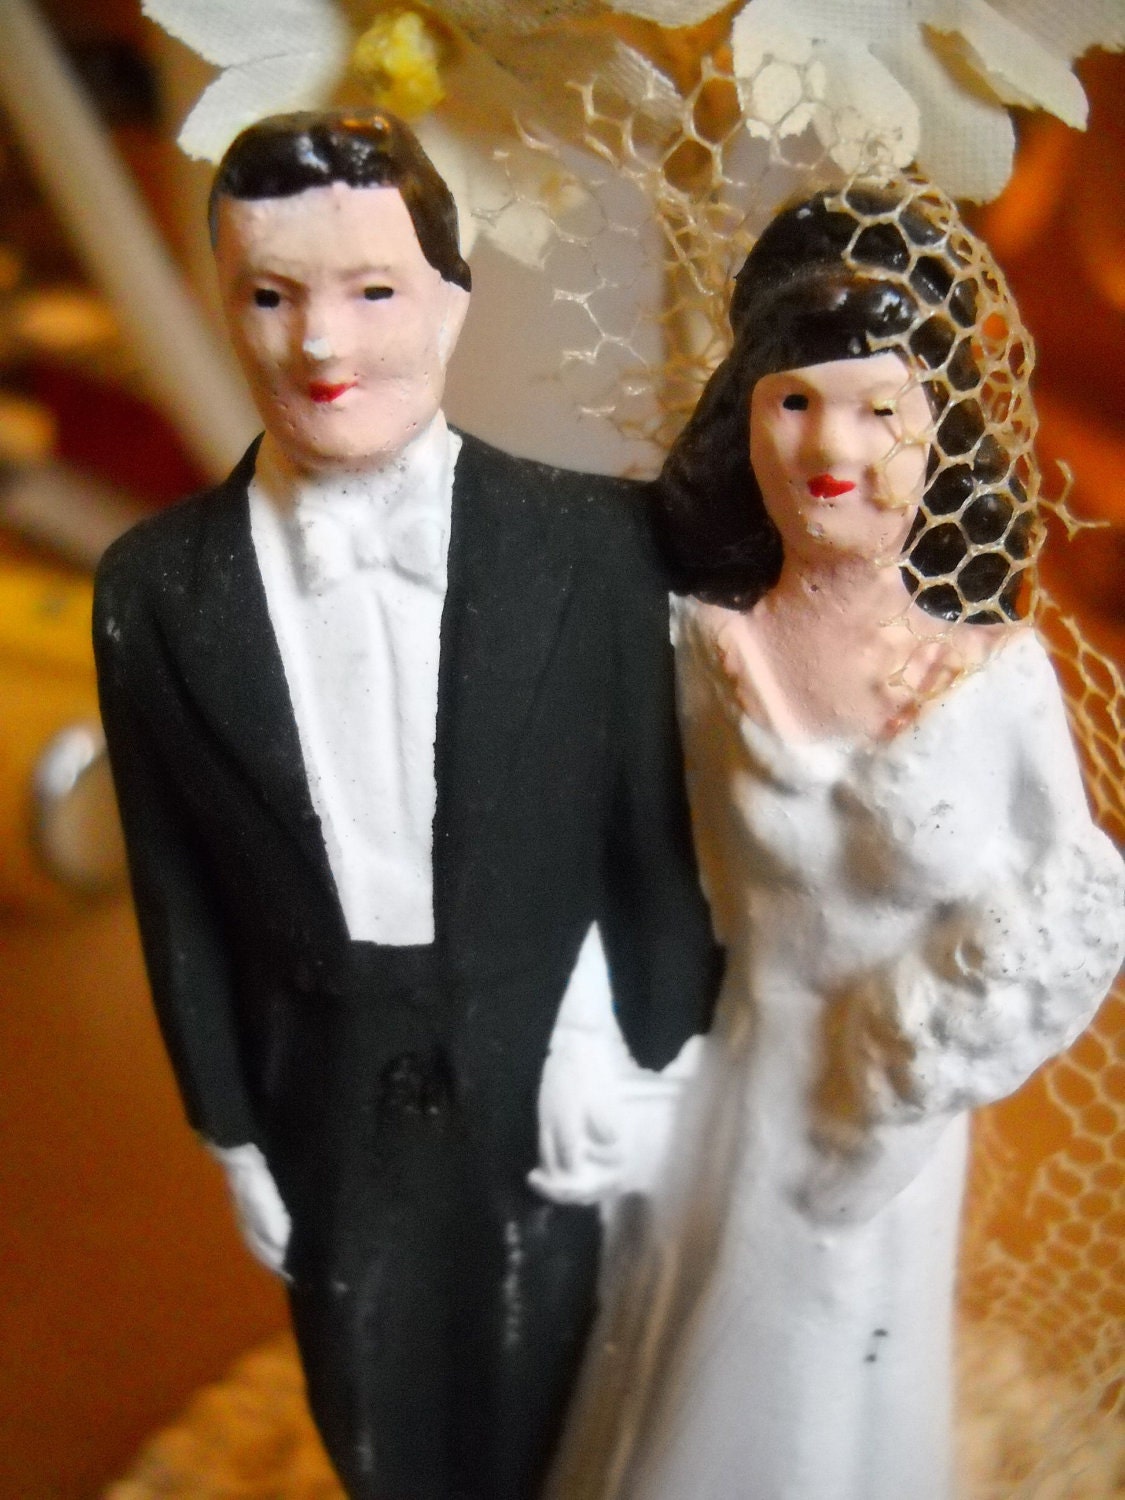 Vintage Brunette Bride and Groom Wedding Cake Topper From dragonflyonbrady